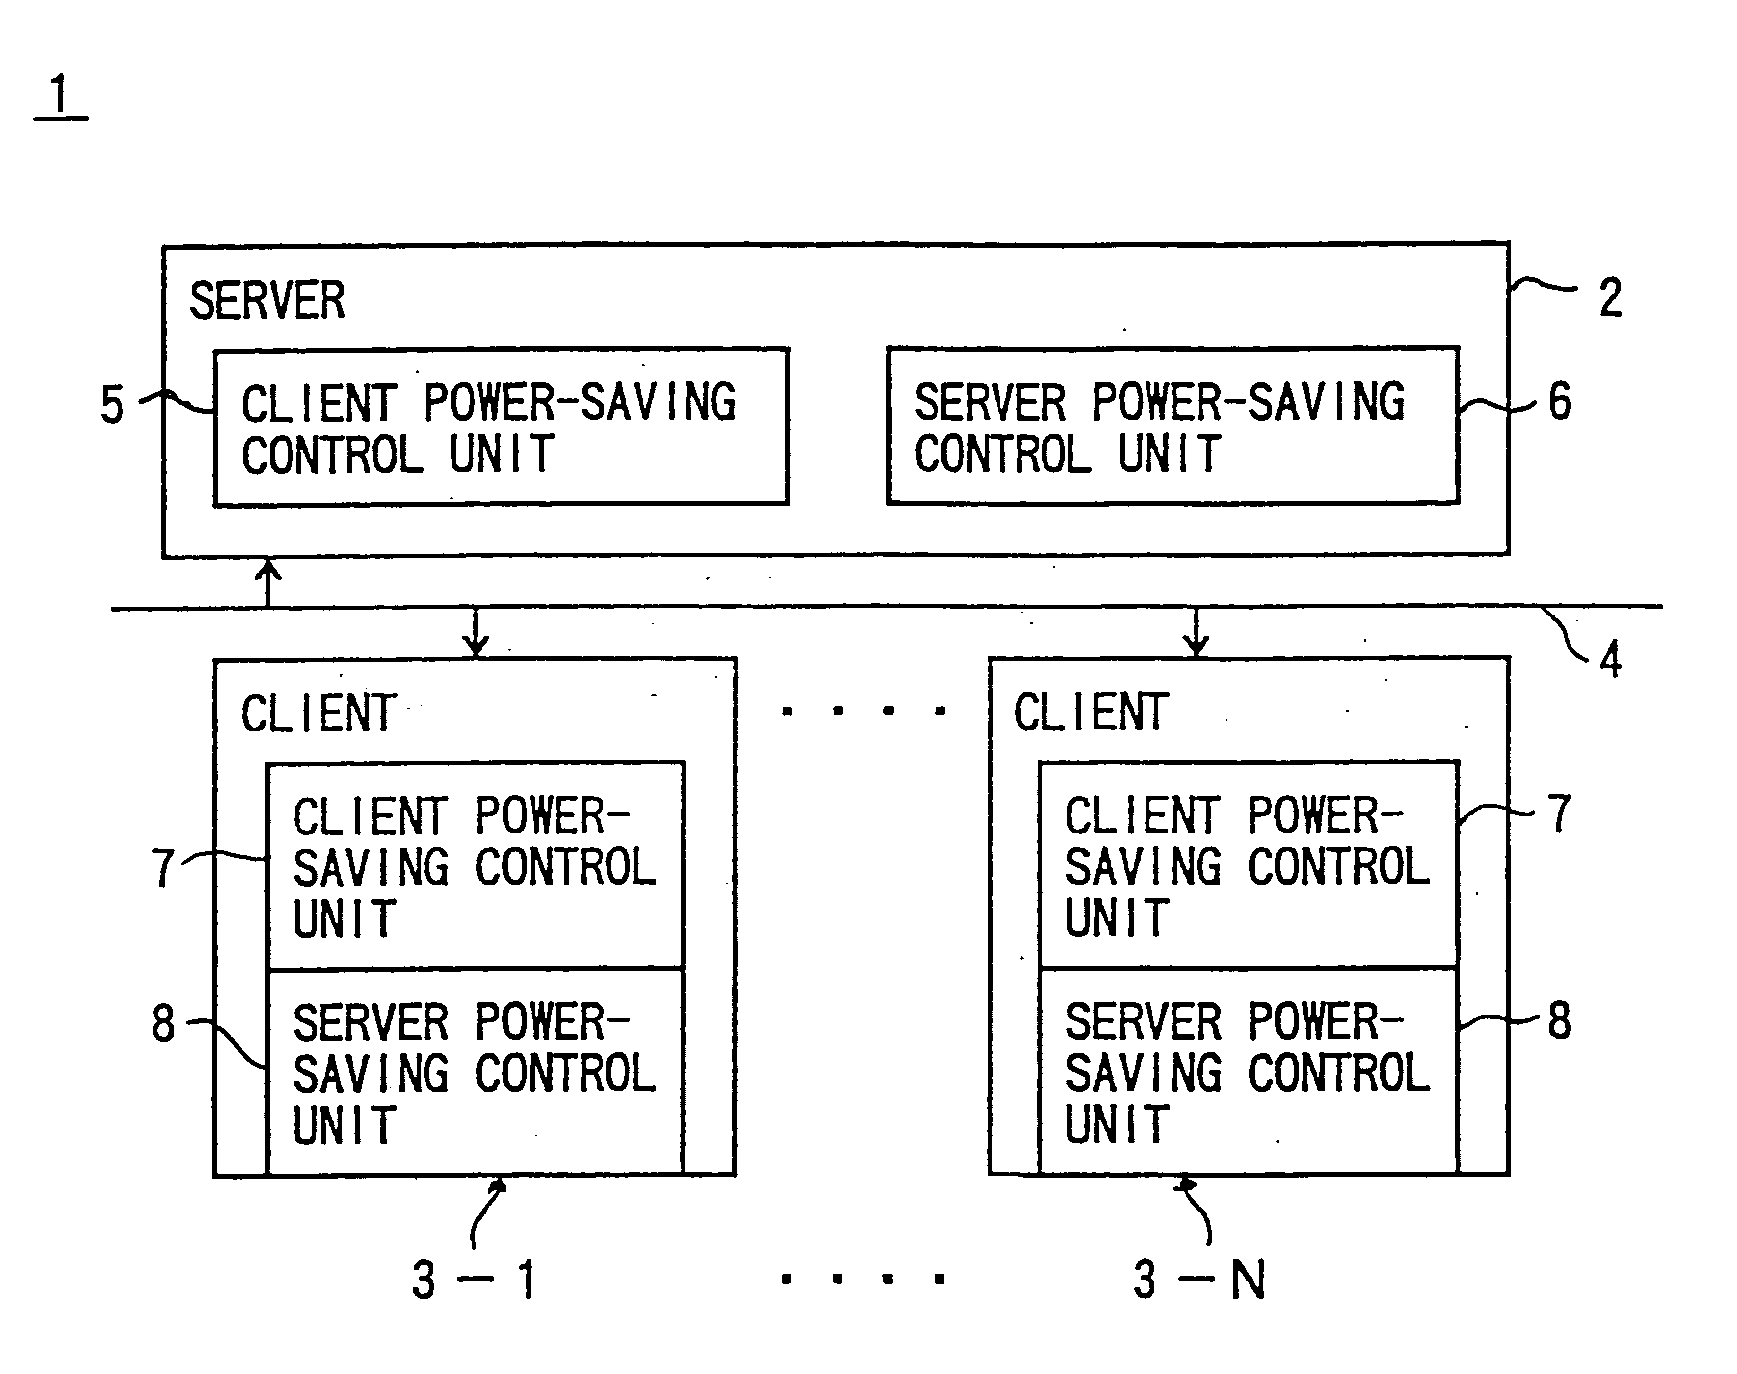 Power control of remote apparatus via network